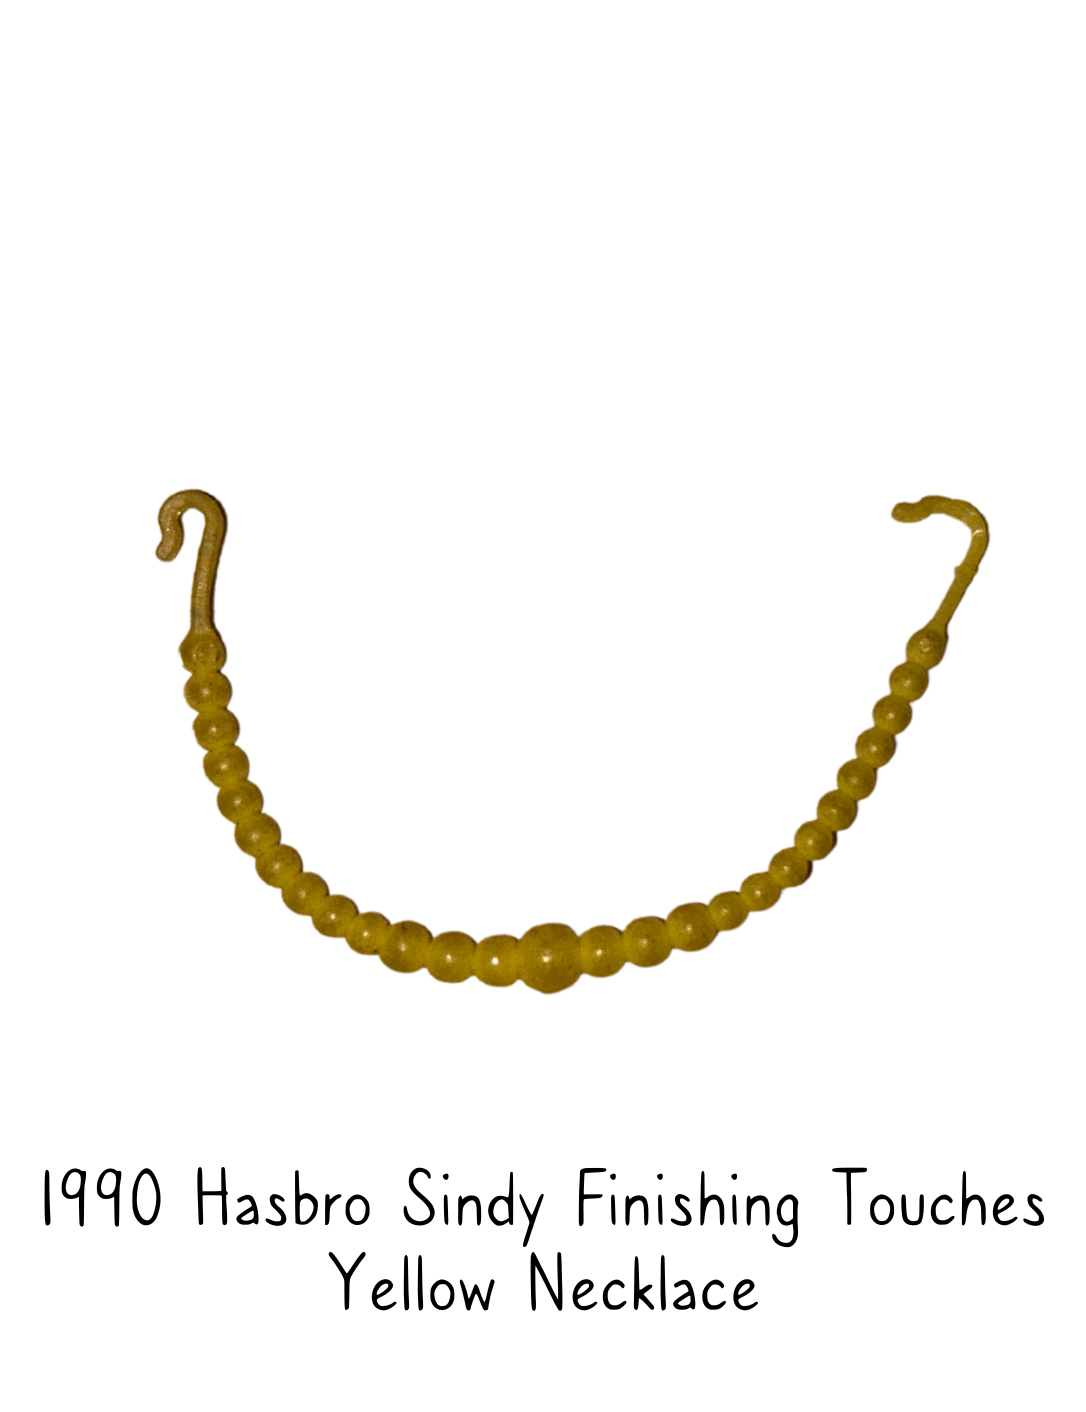 1991 Hasbro Sindy Finishing Touches Yellow Necklace